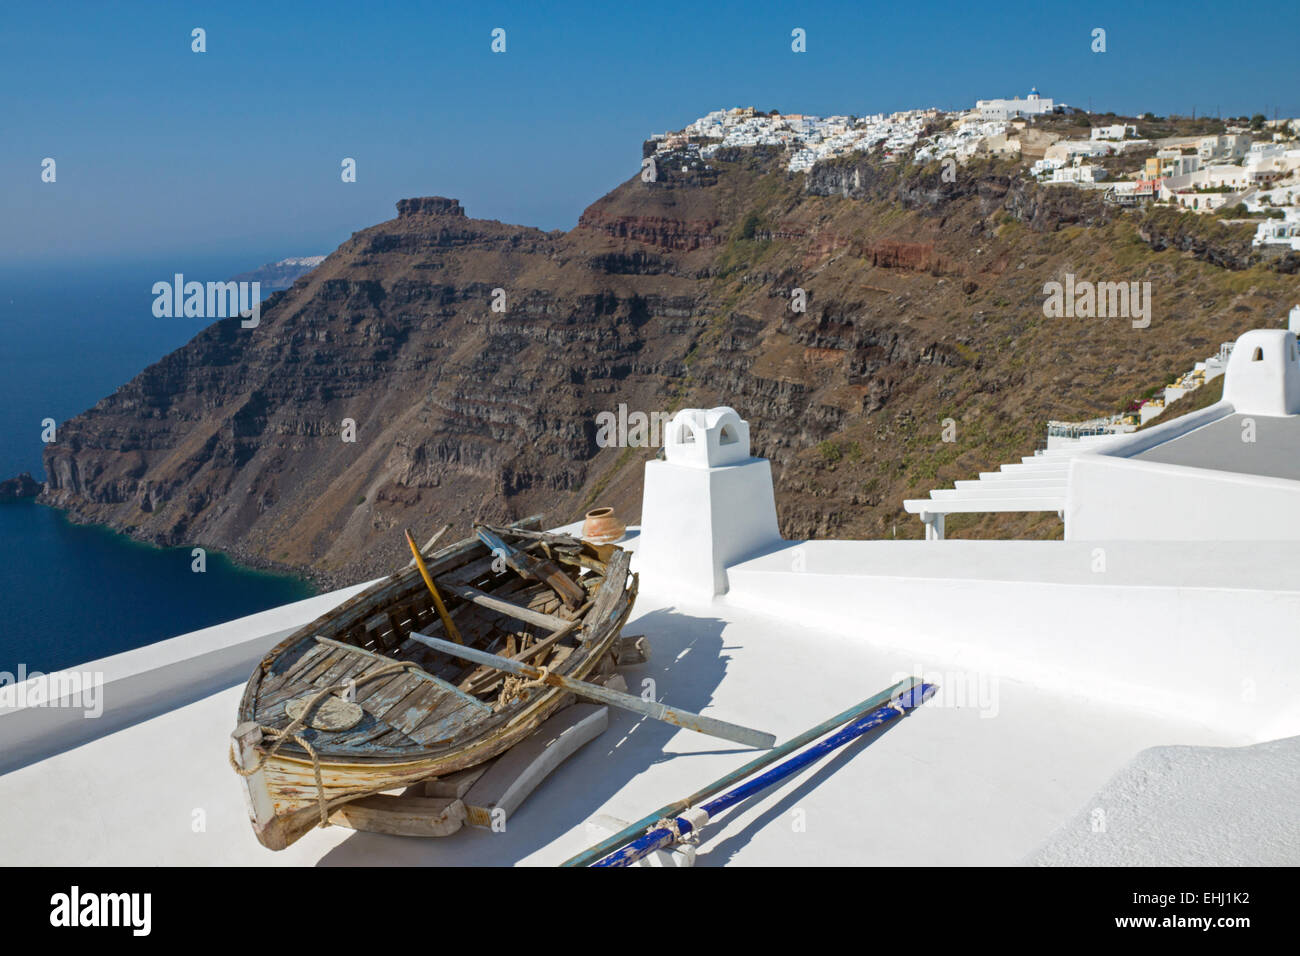 Boat and Imerovigli, Santorini island Stock Photo